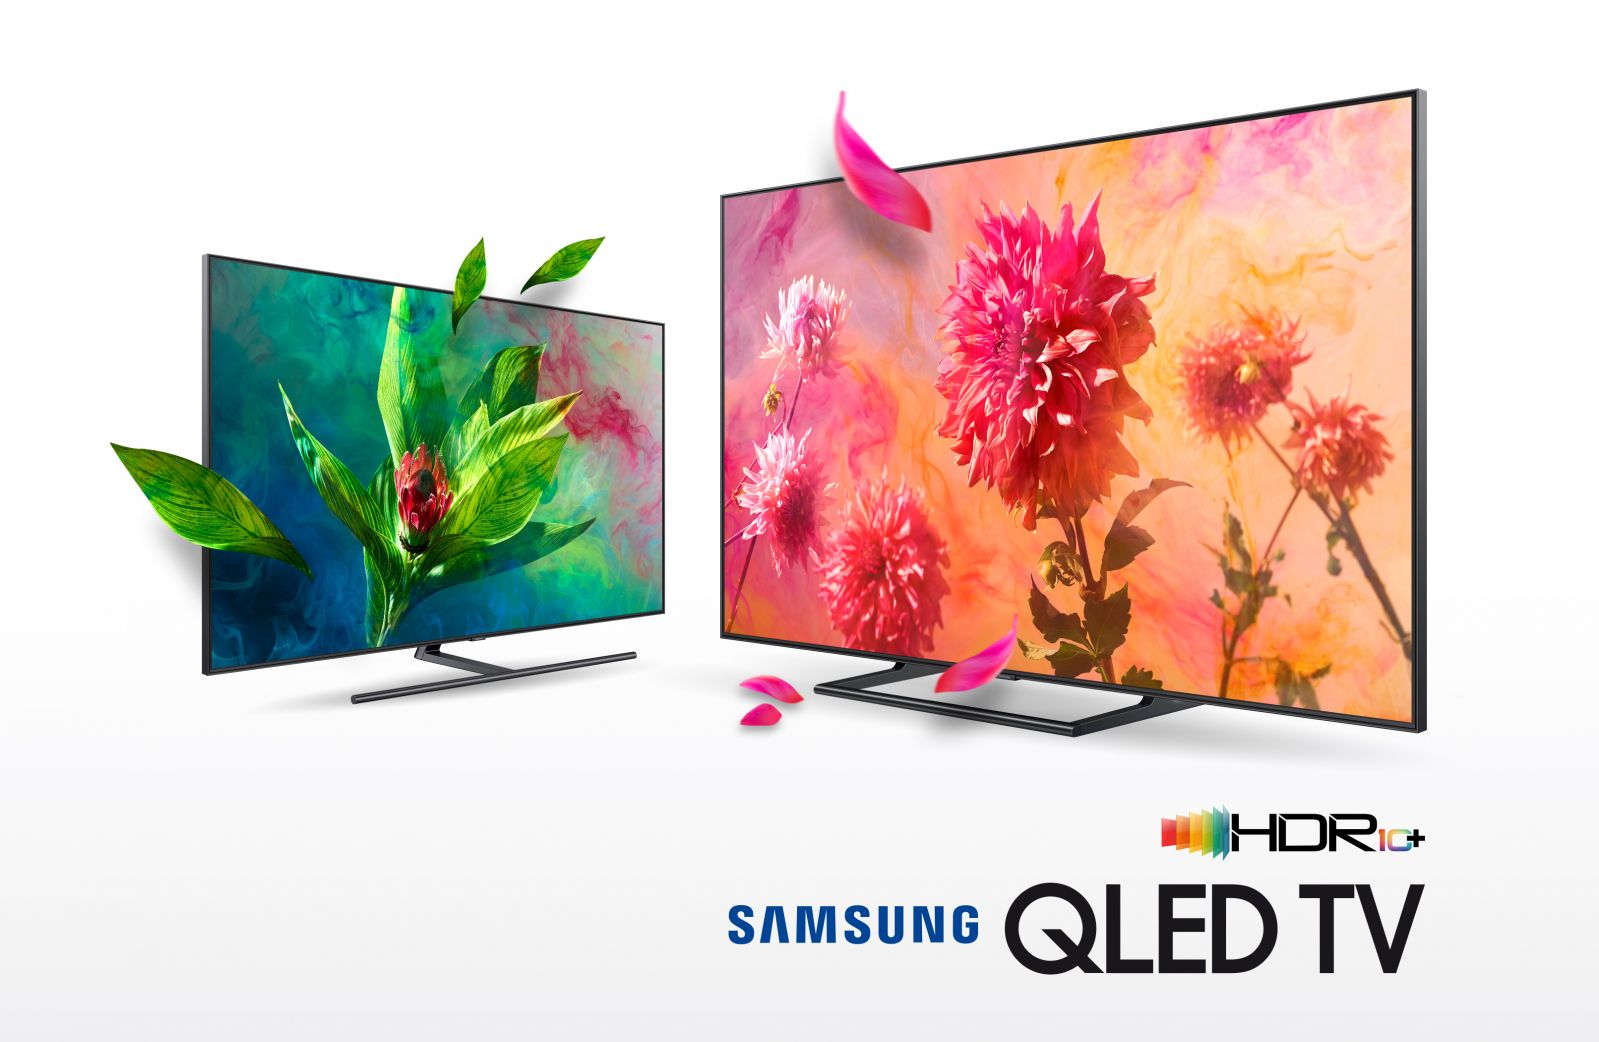 Samsung-TV-HDR10Plus-Certification-3.jpg